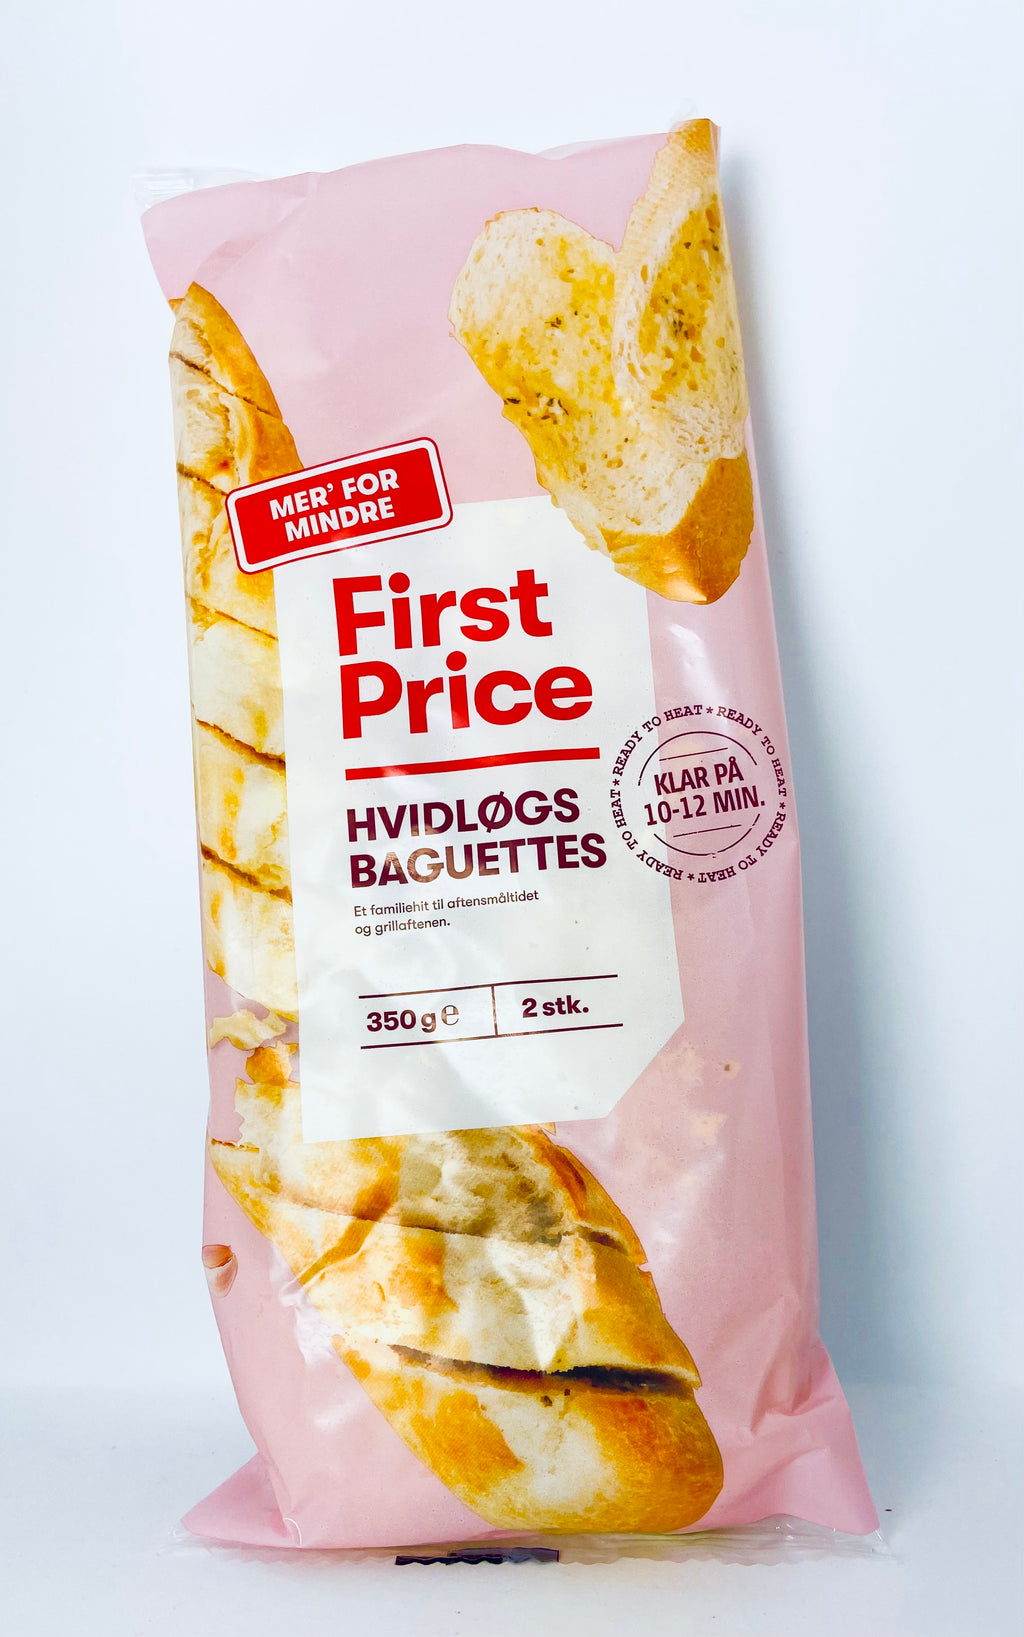 Hvidløgsbaguette 2 stk - First Price (Qerisut - Frost)